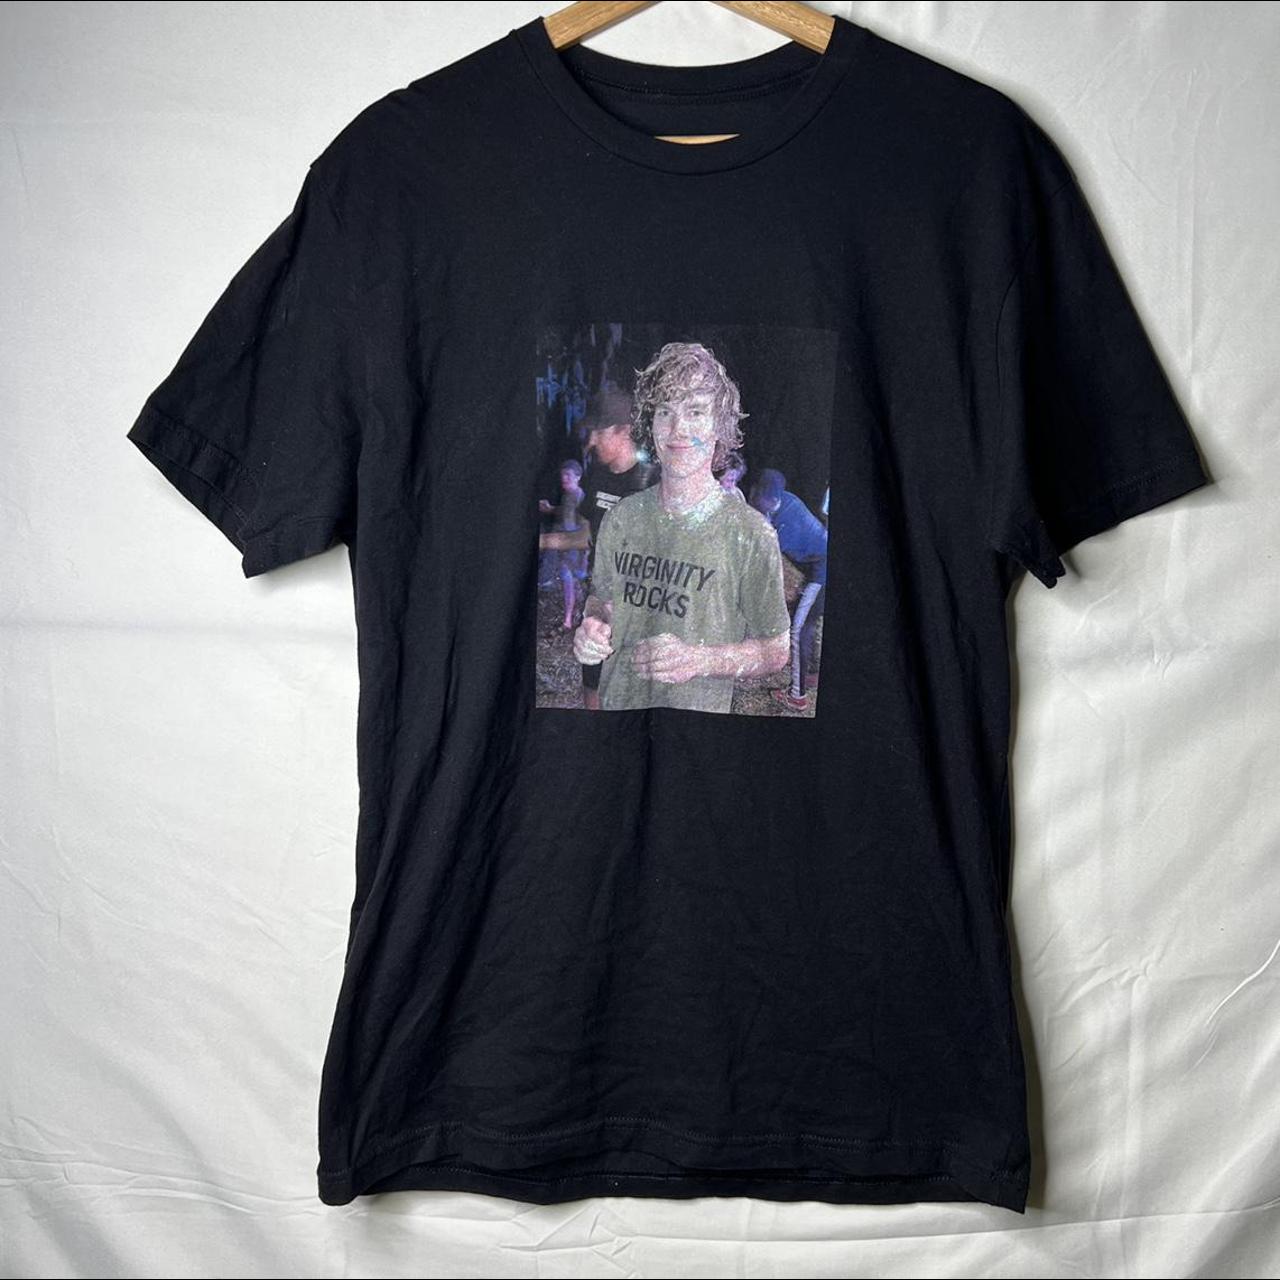 Product Image 1 - Danny Duncan Virginity Rocks T-Shirt

Size